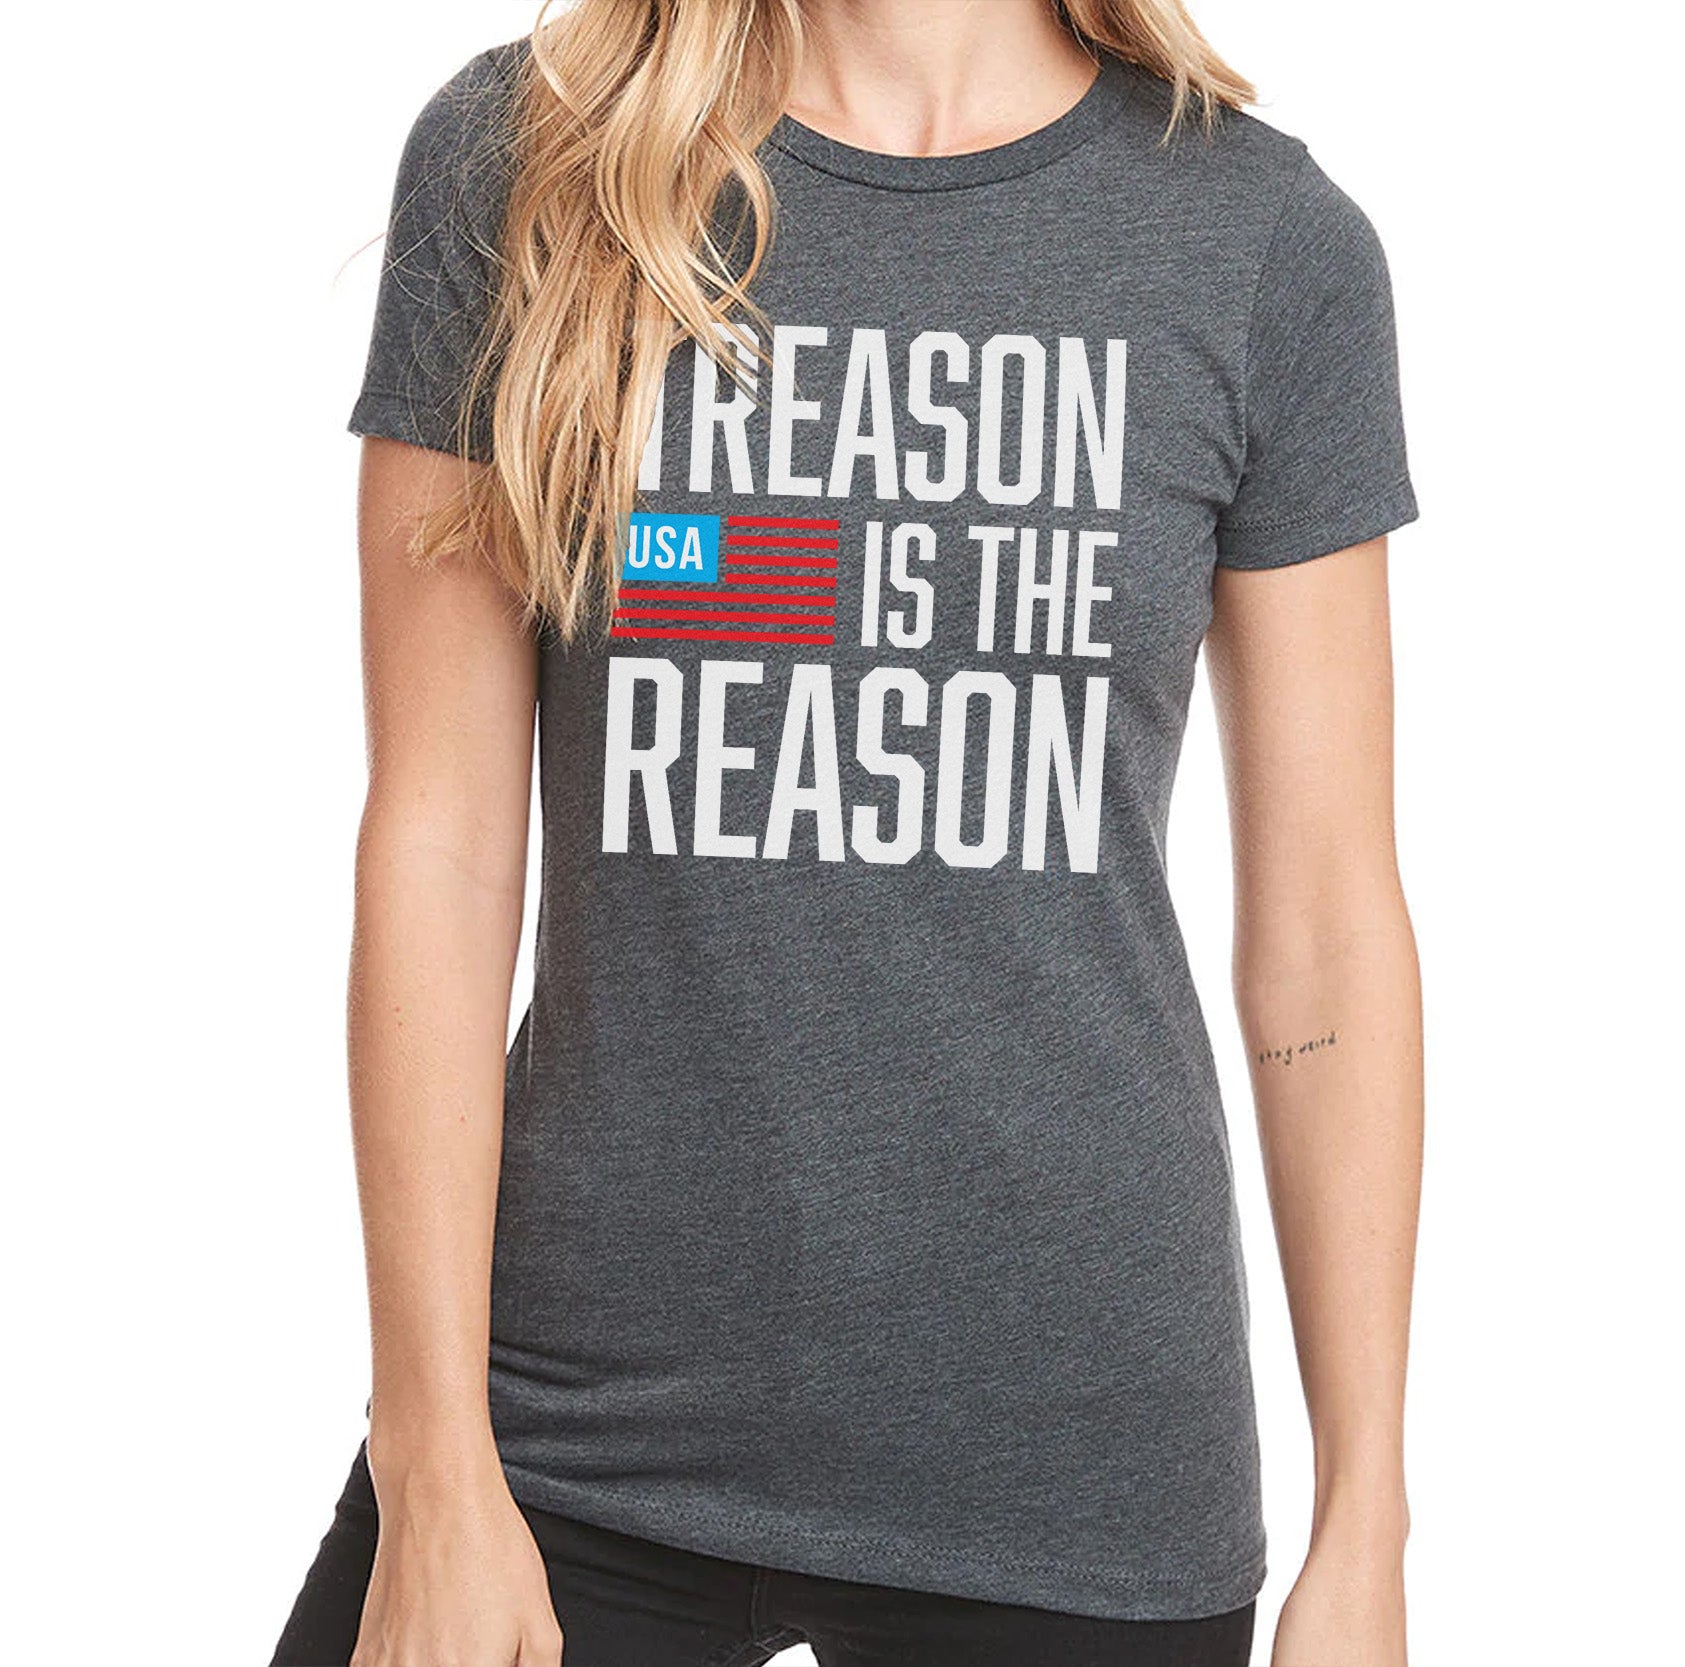 Treason Is The Reason Ladies